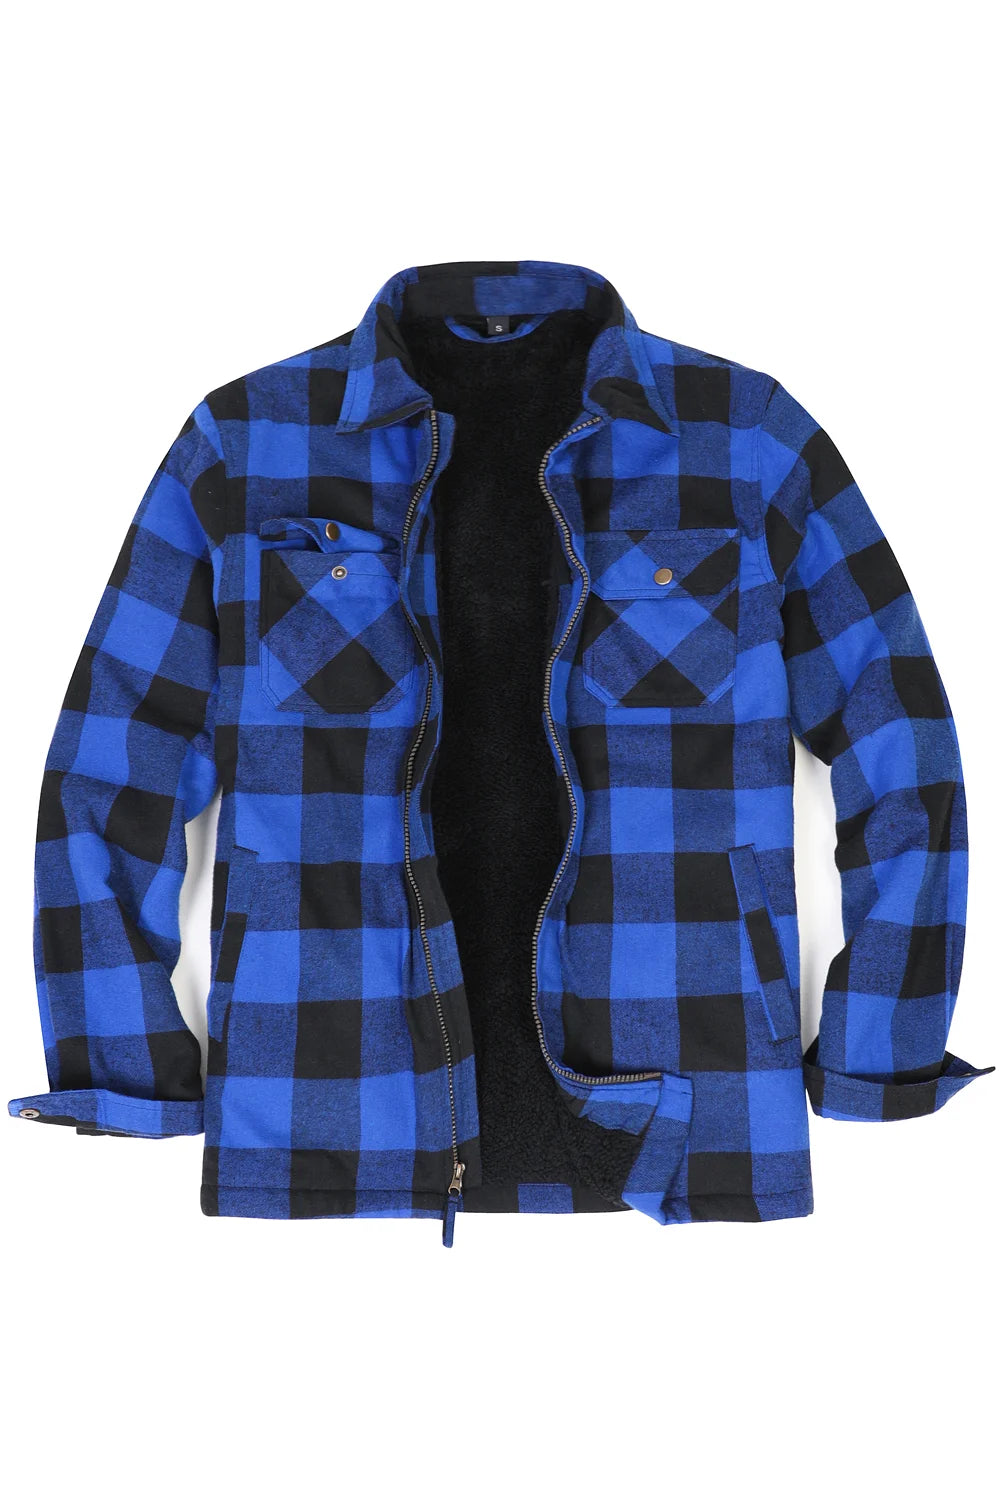 Men's Warm Sherpa Fleece Lined Full Zip Up Plaid Flannel Shirt Jacket